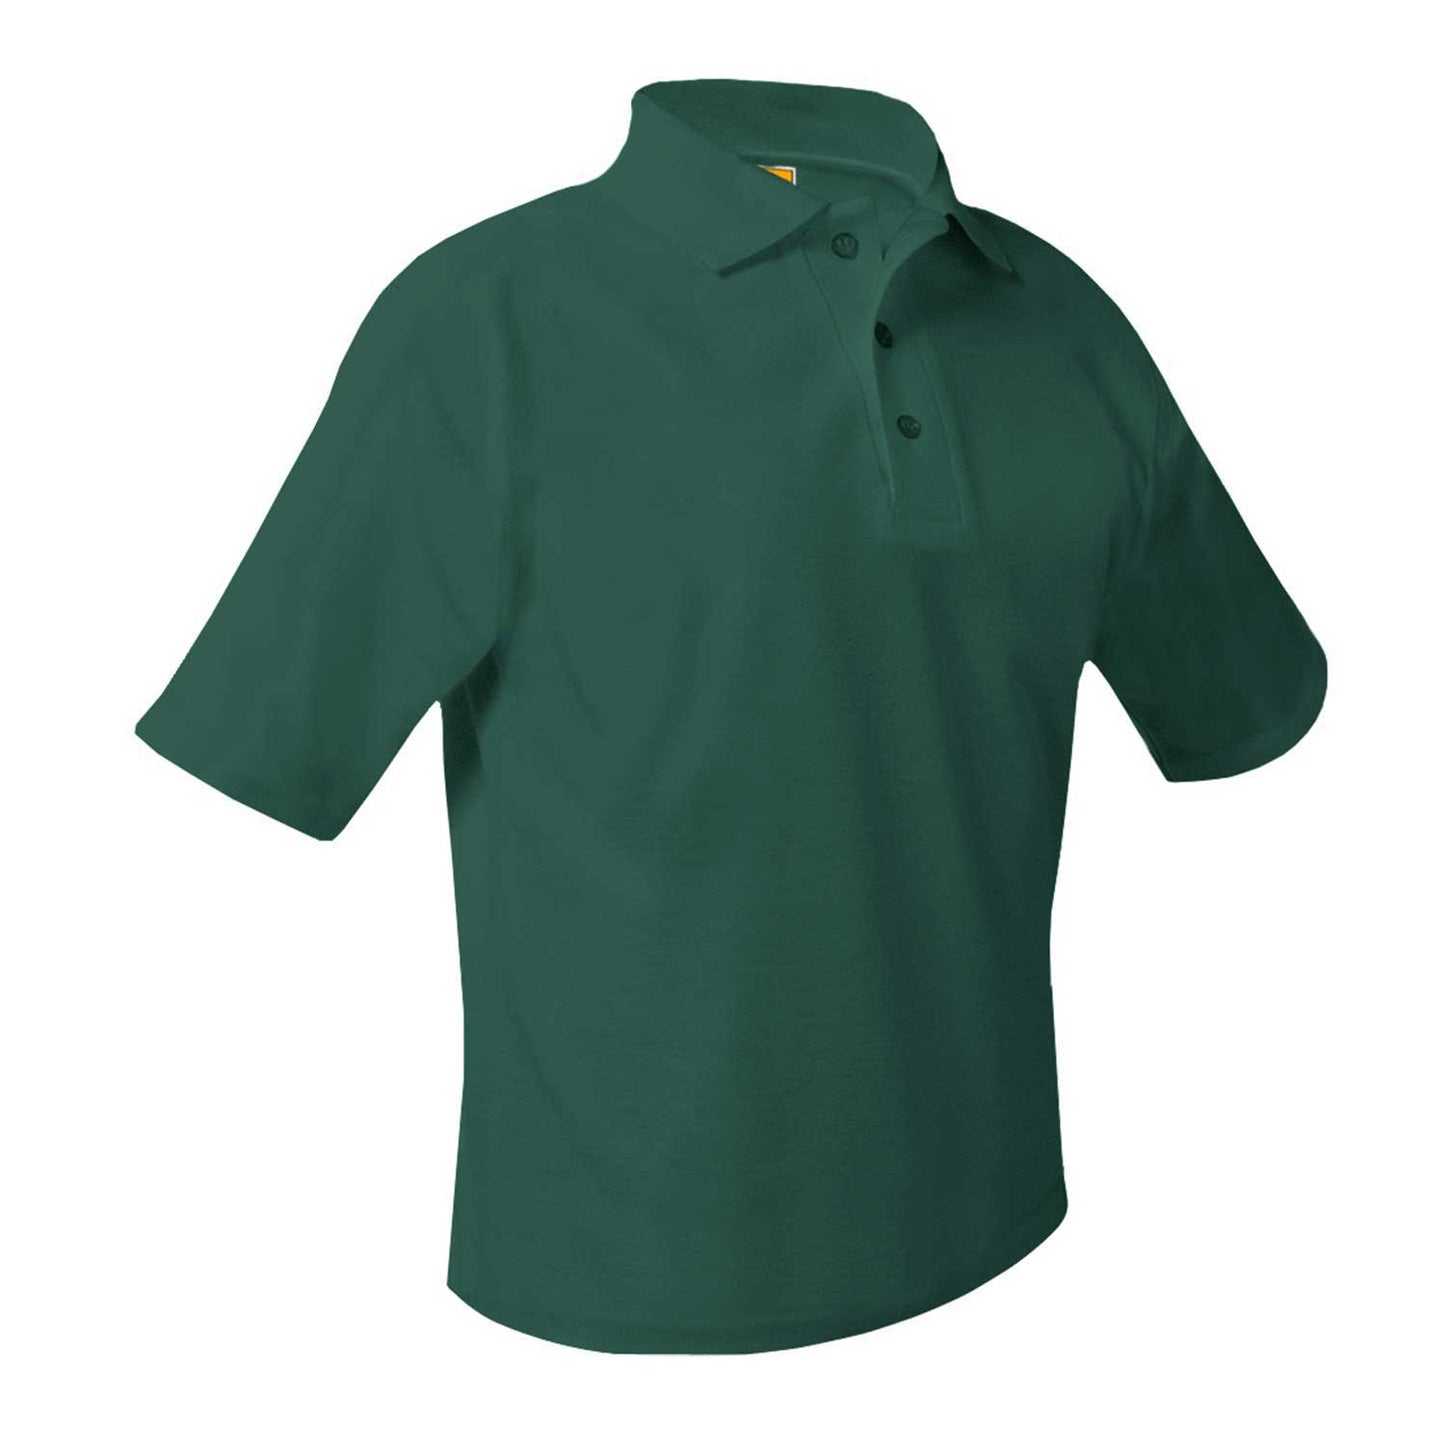 Unisex Pique Polo Shirt, Short Sleeves, Hemmed w/Logo - 1110